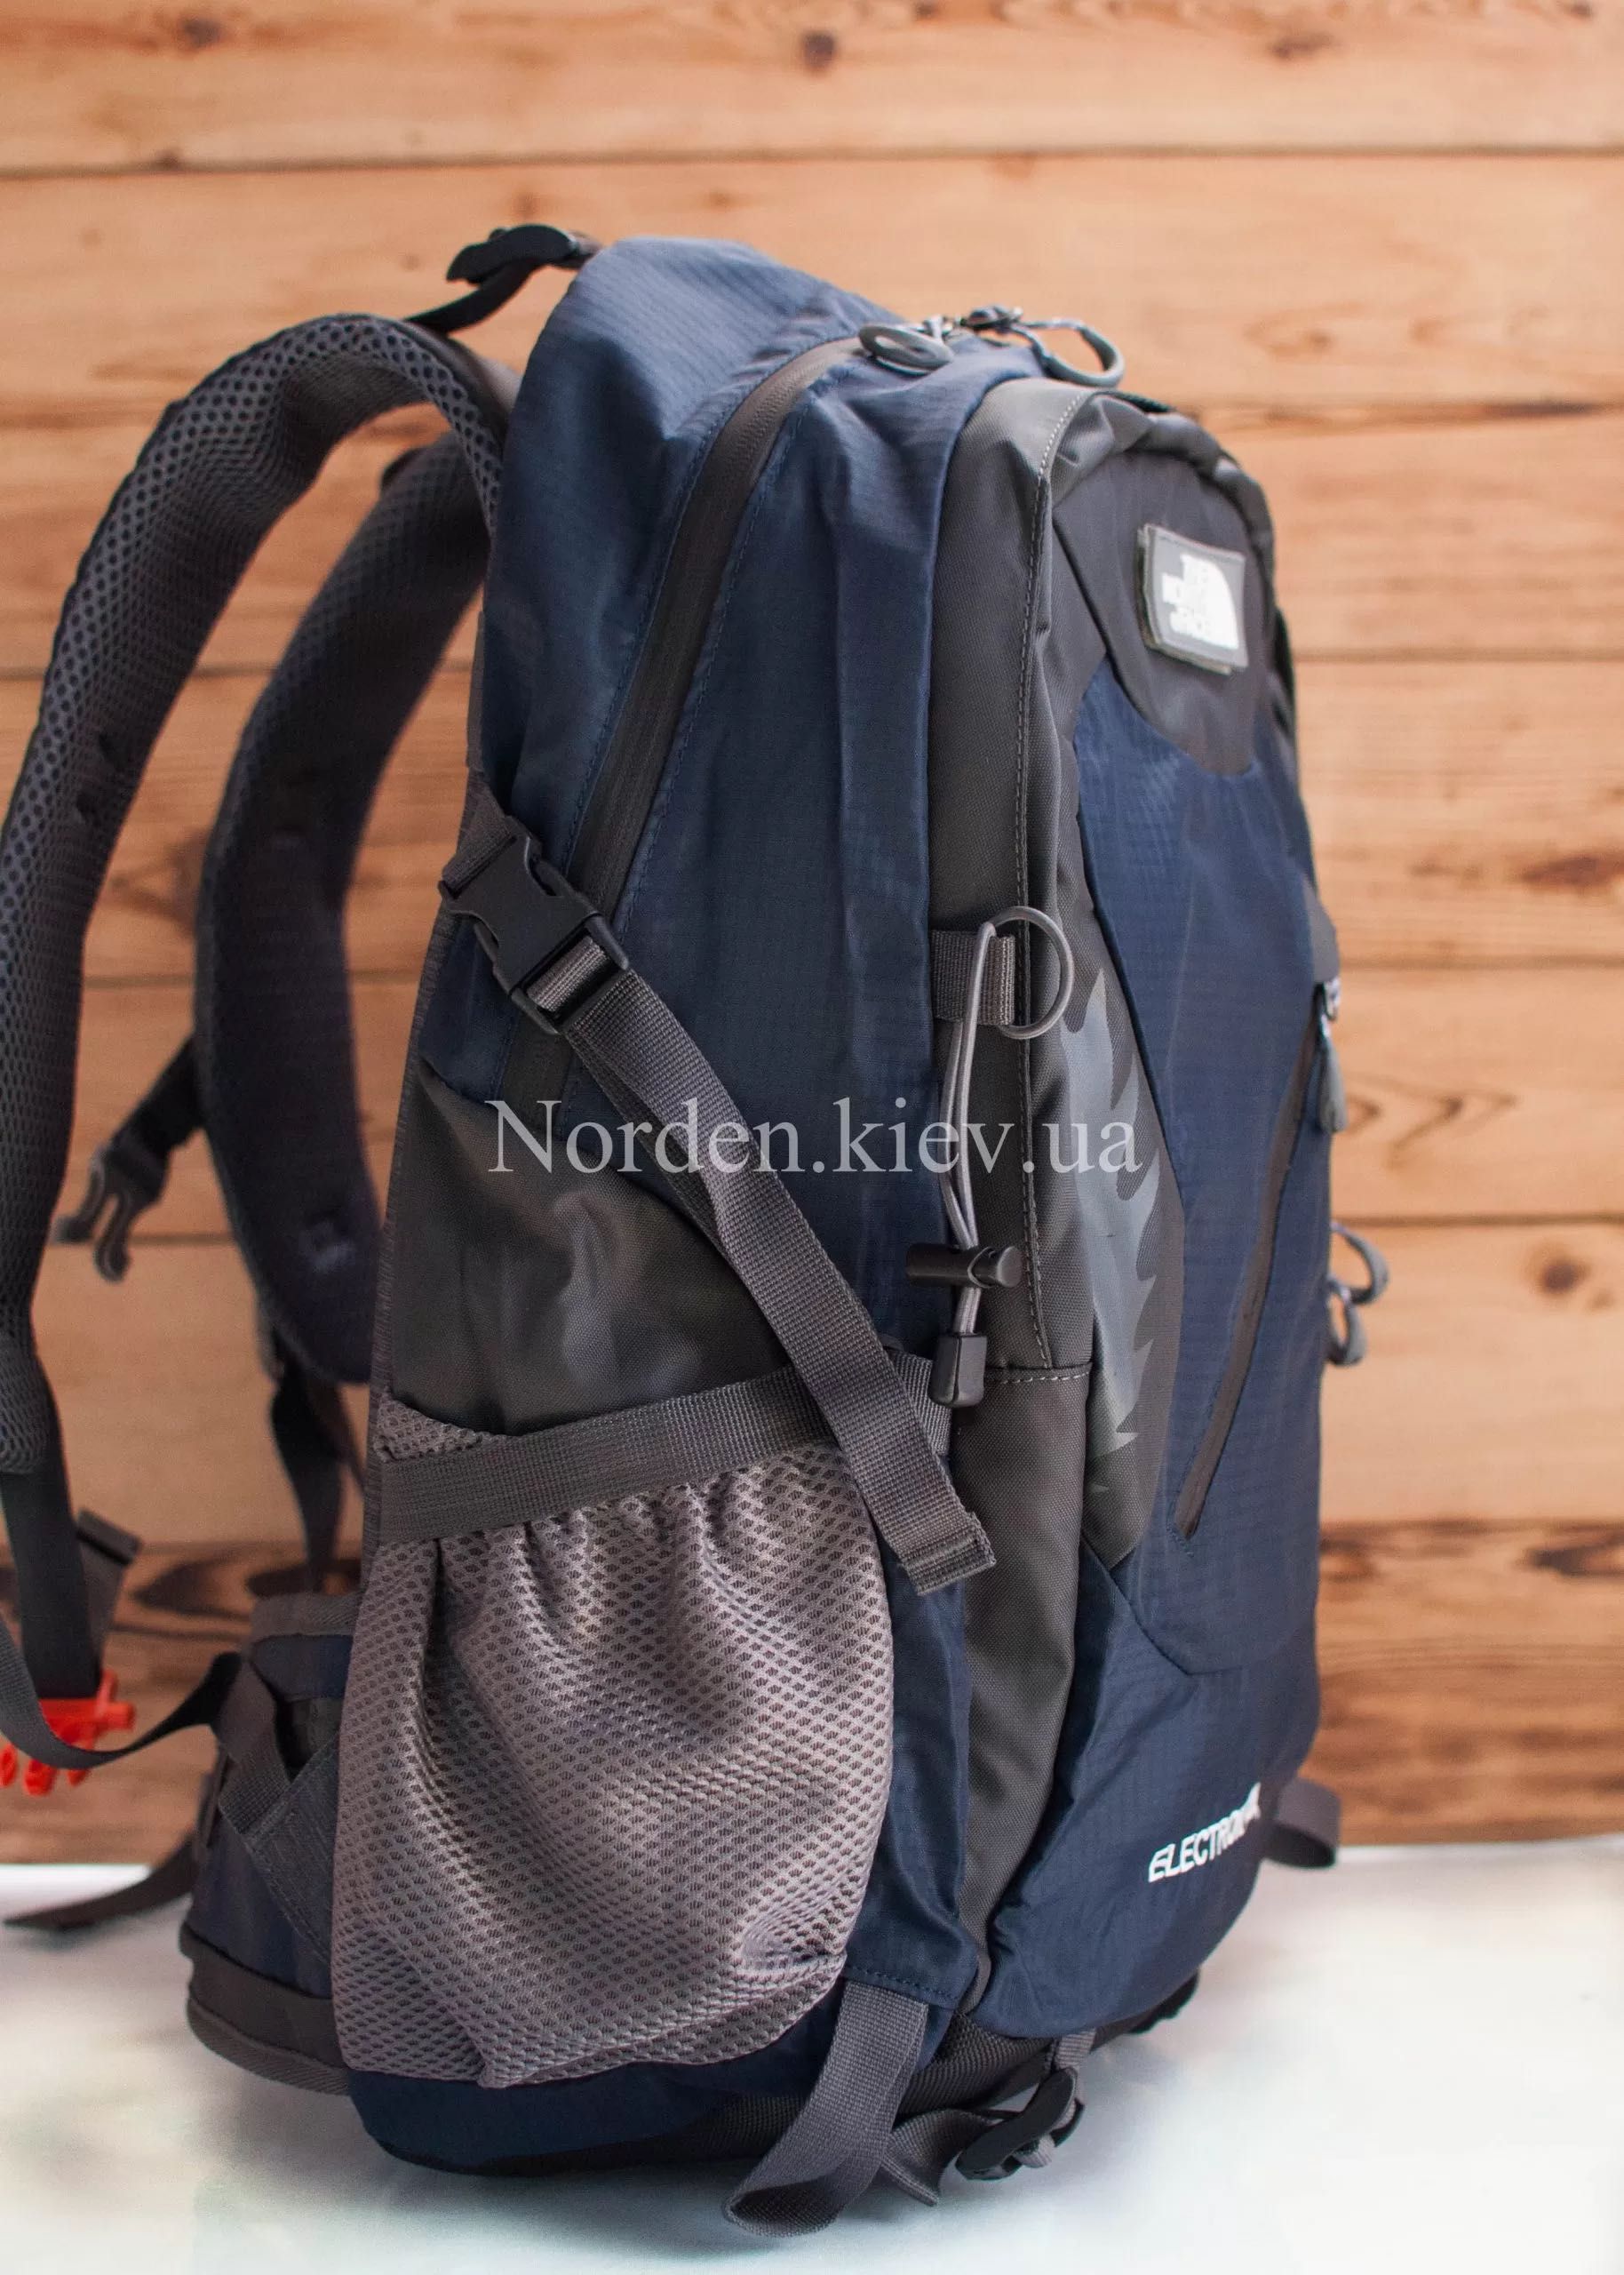 Новий рюкзак The North Face синій 40л